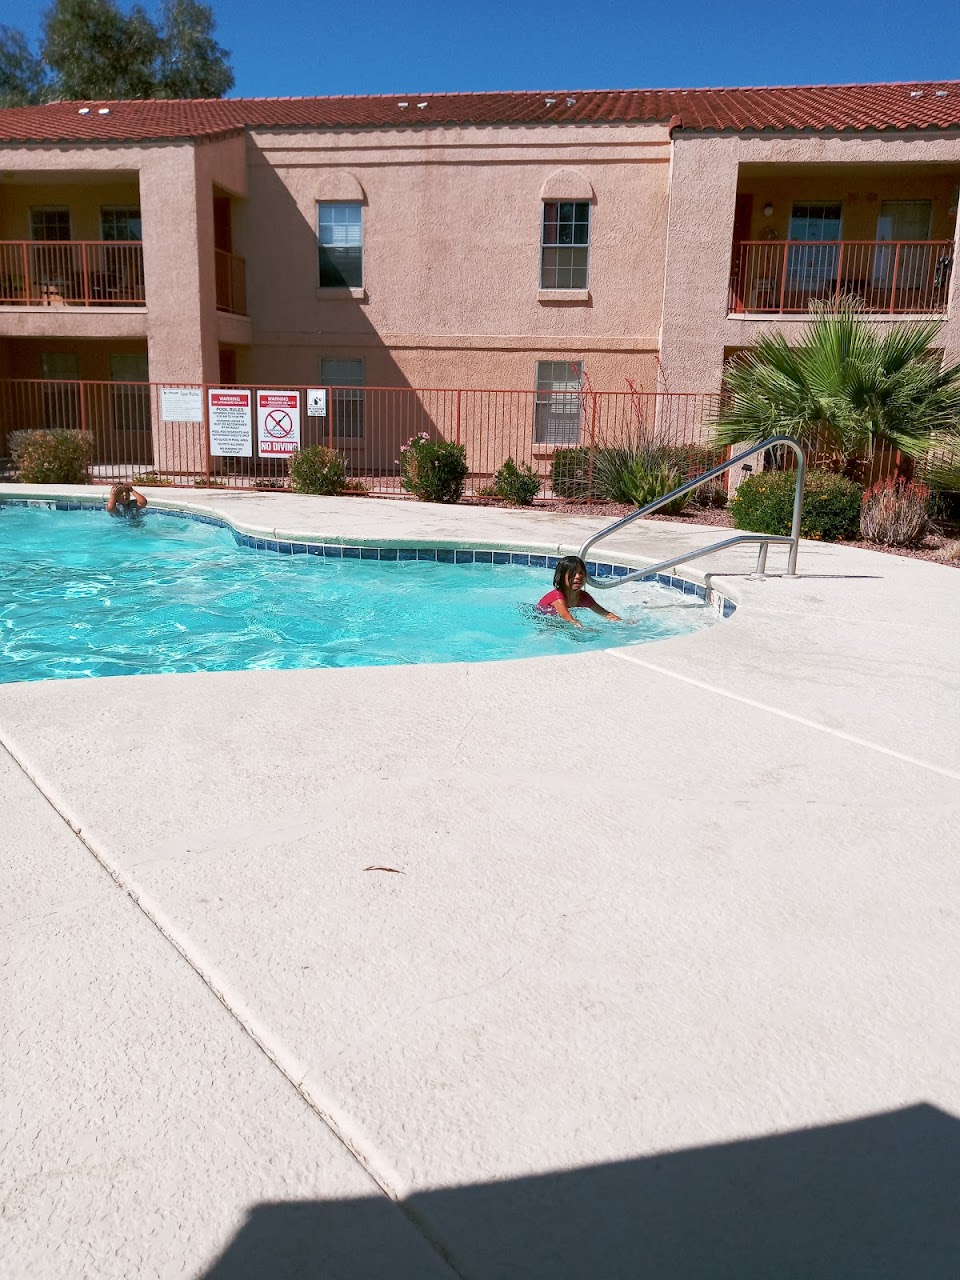 Photo of LA POSADA APTS (TUCSON). Affordable housing located at 6300 S HEADLEY RD TUCSON, AZ 85746